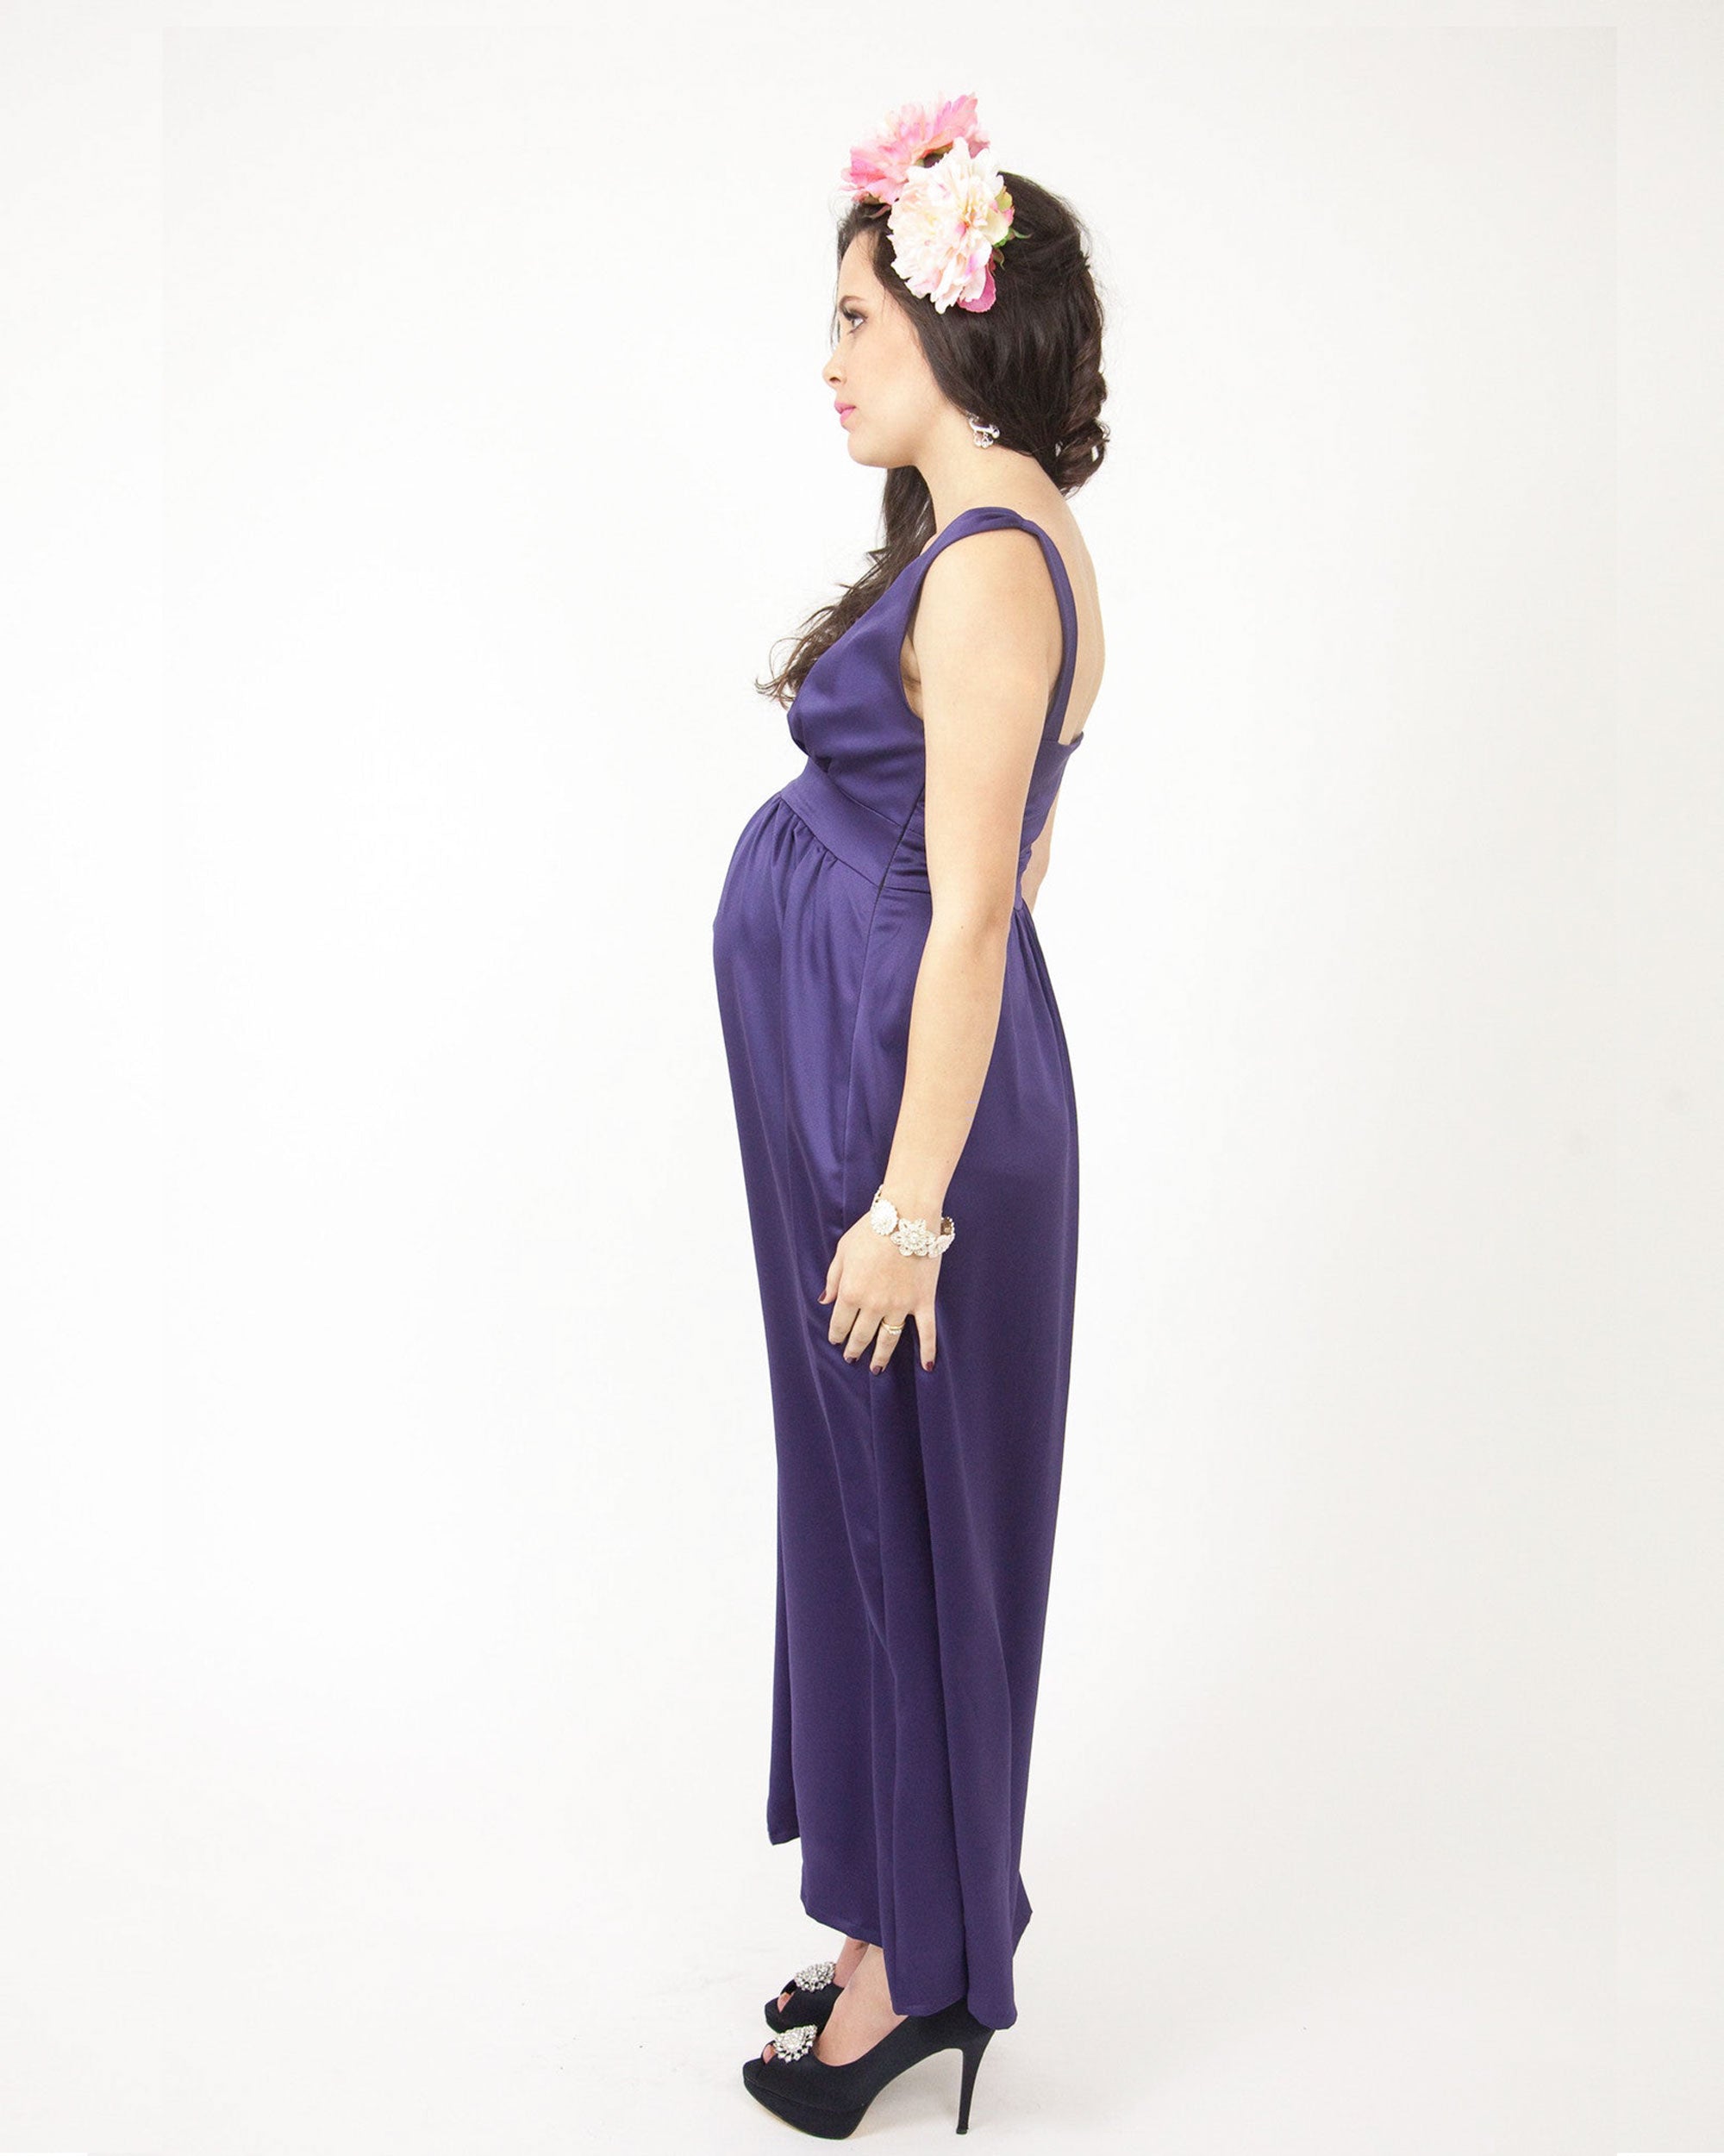 Charlotte Devereux 'Celebration' Maternity Formal Dress - Damson Purple